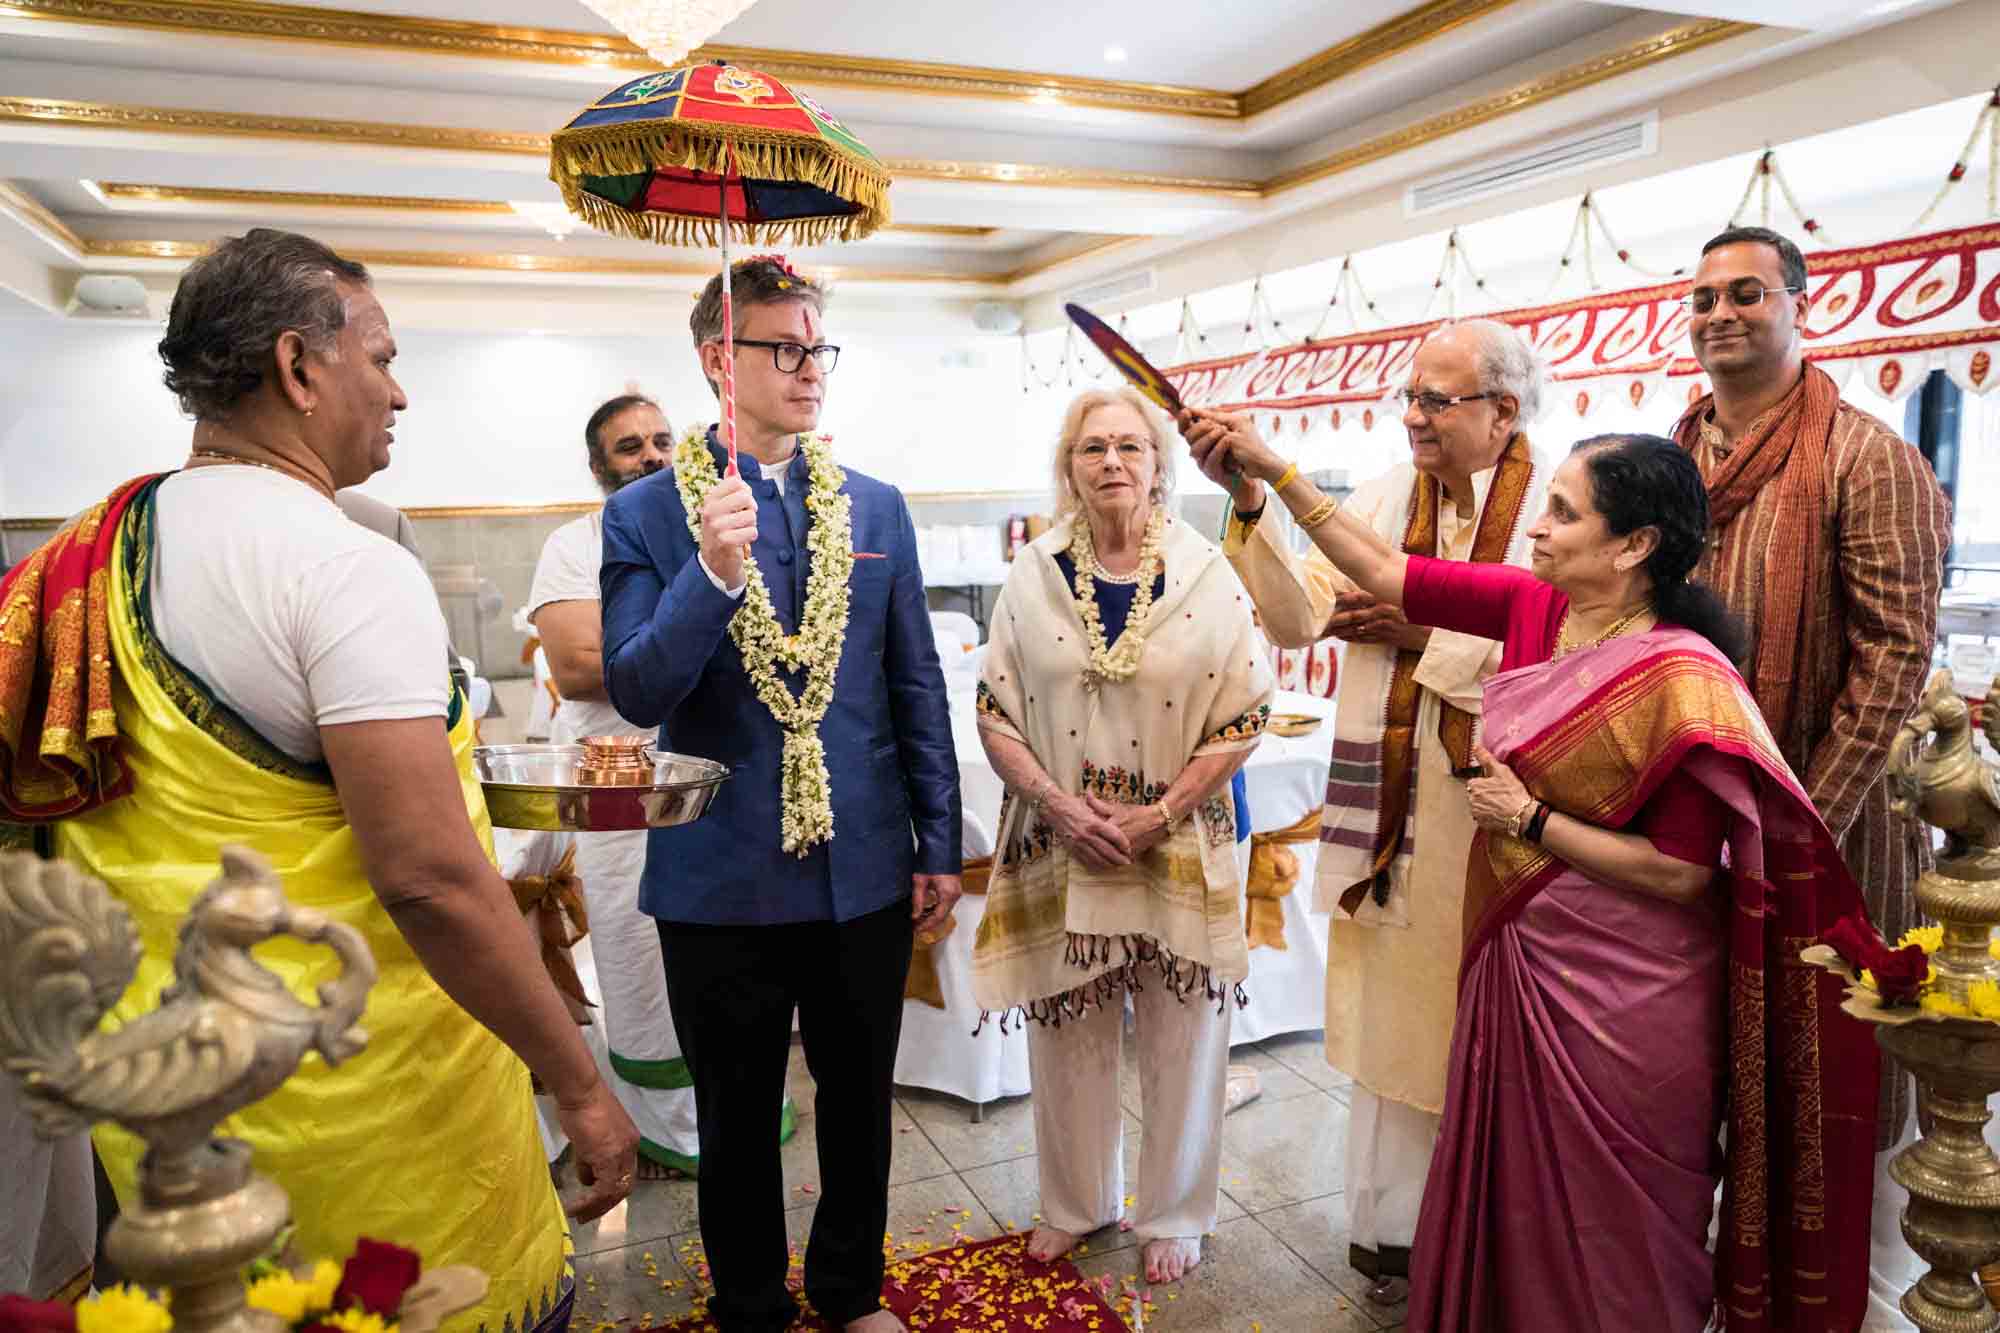 Flushing Temple wedding photos of bride's family fanning groom holding umbrella